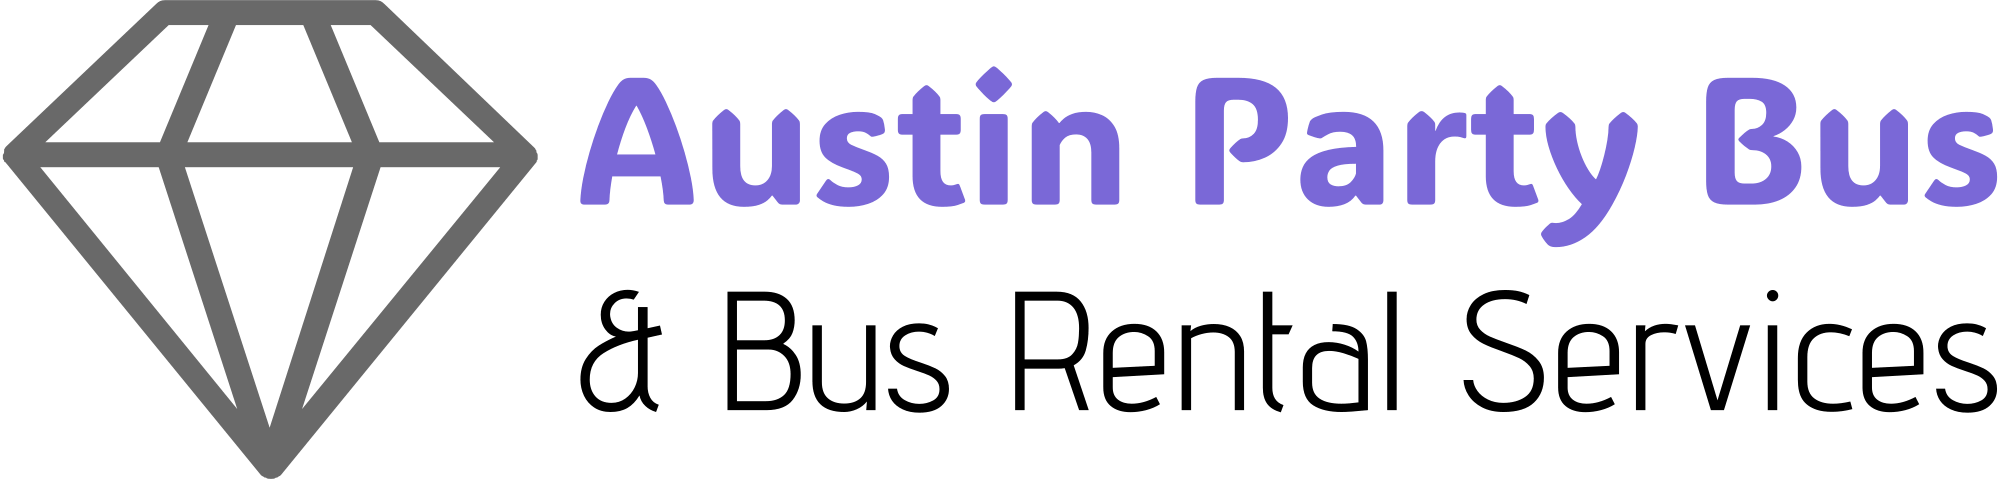 Party Buses Austin logo